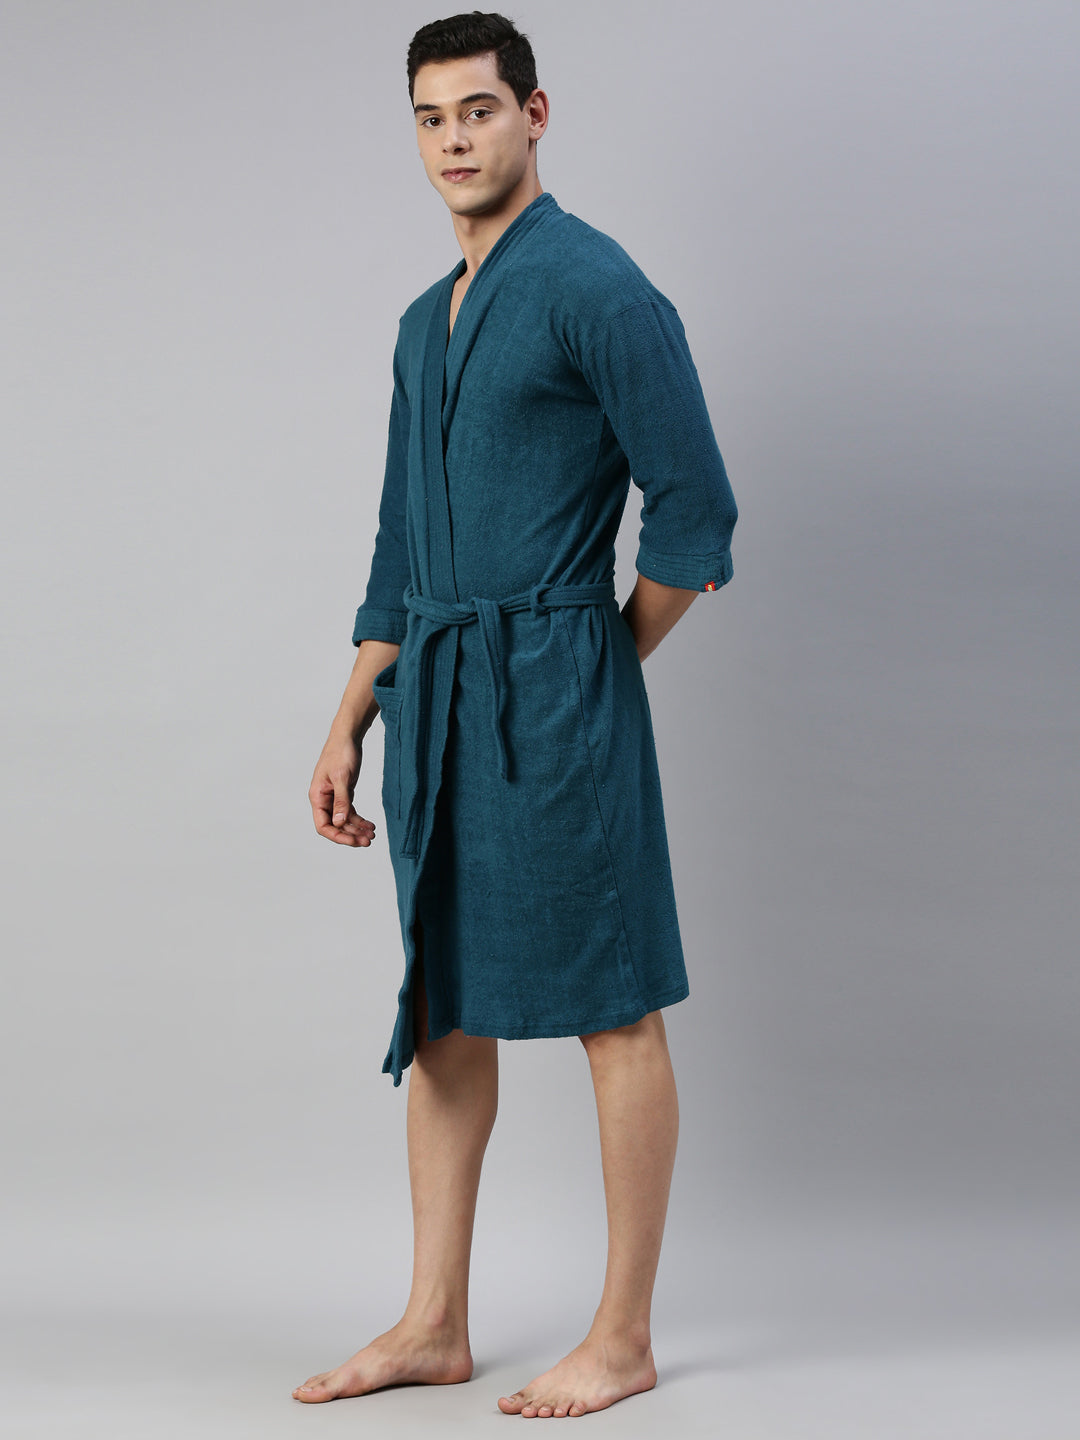 Buy Goldstroms Bathrobes & Dressing gown online - Men - 7 products